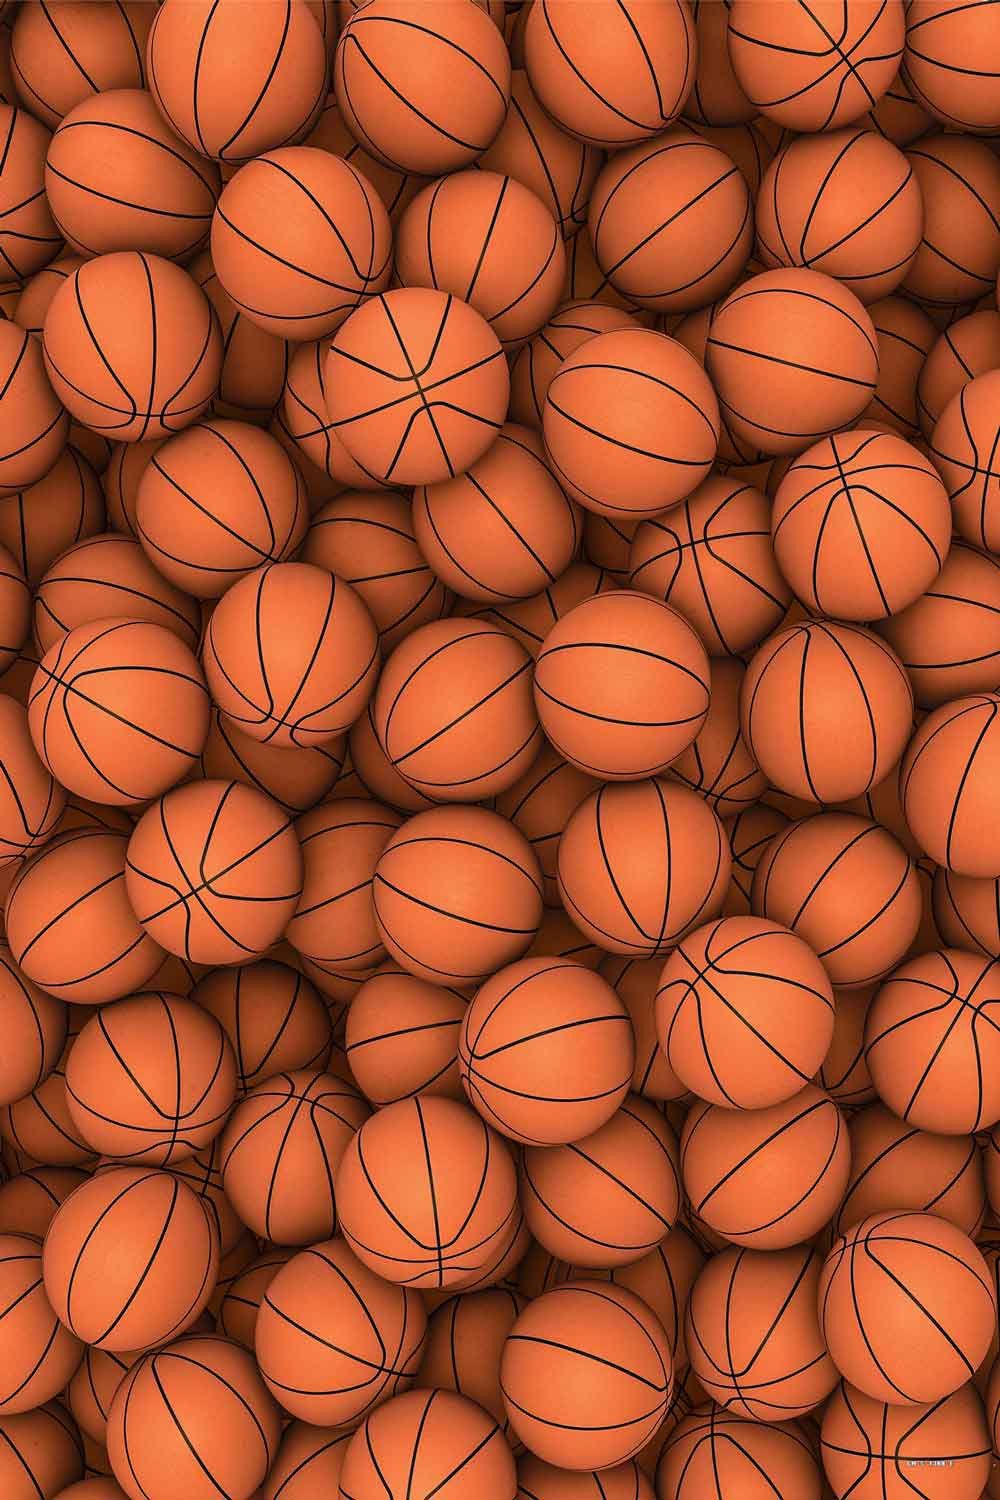 A close up of many basketball balls - Basketball